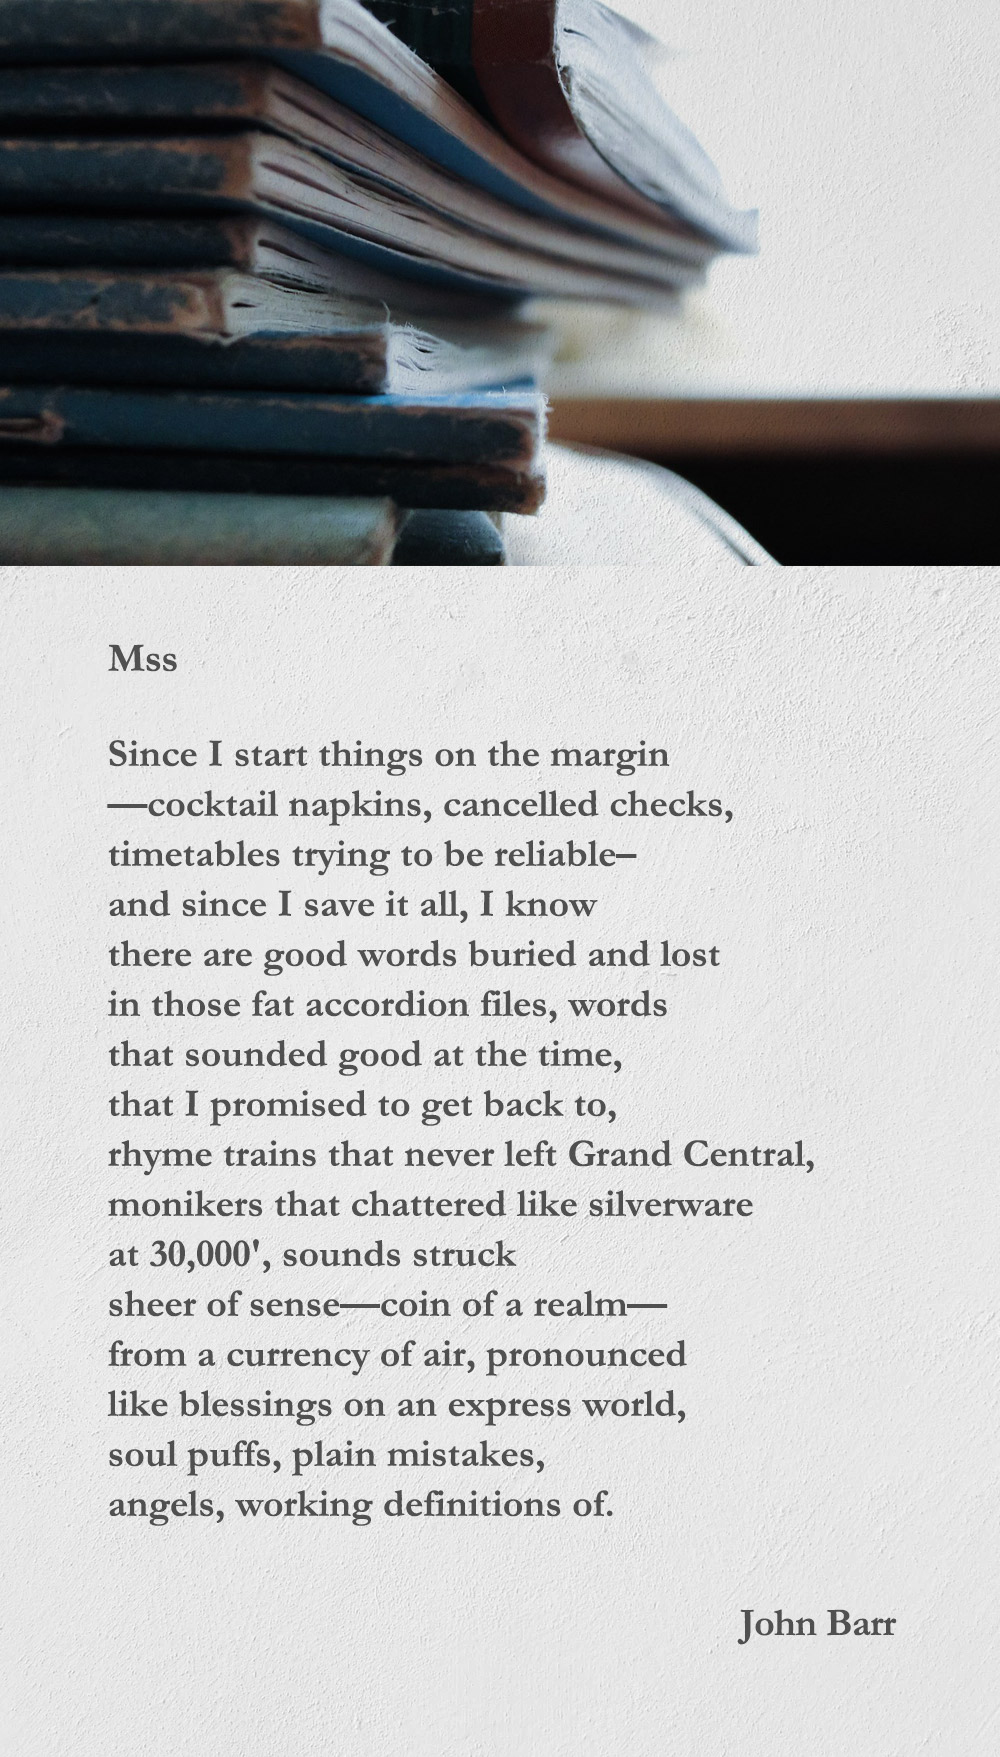 MSS poem by John Barr